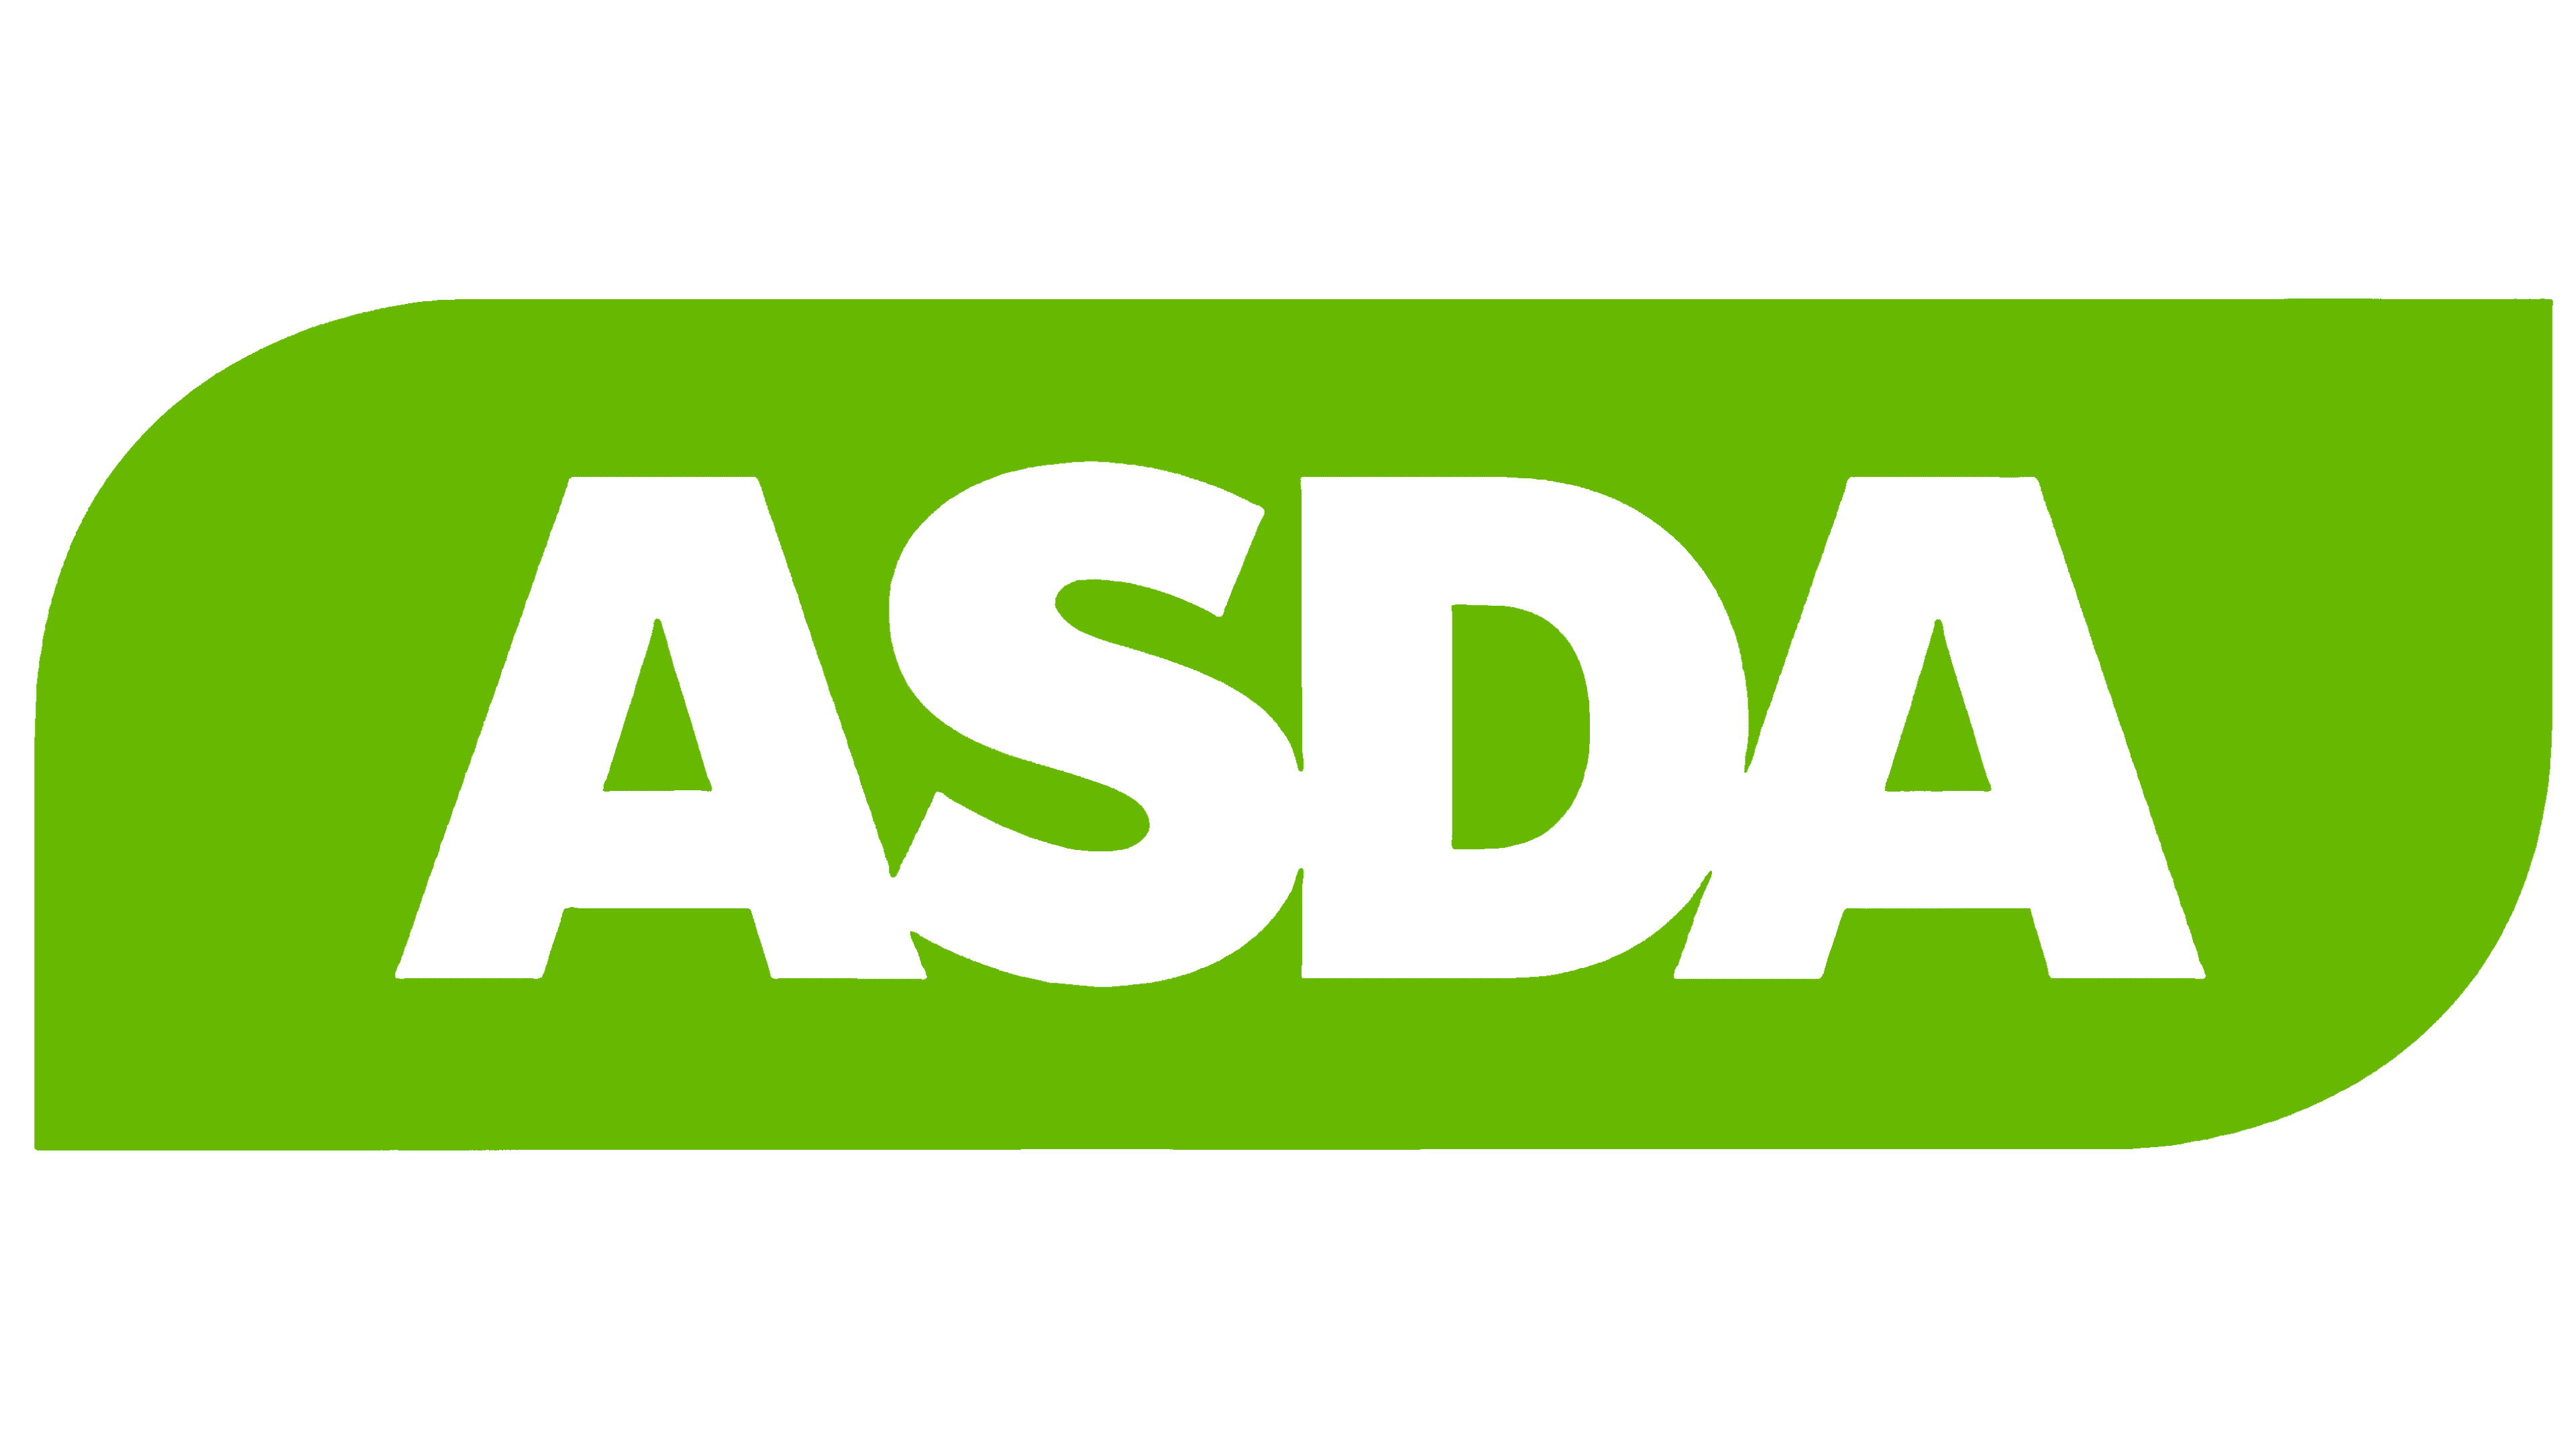 Asda logo. Basda логотип. Логотип сумки. Asda symbol.